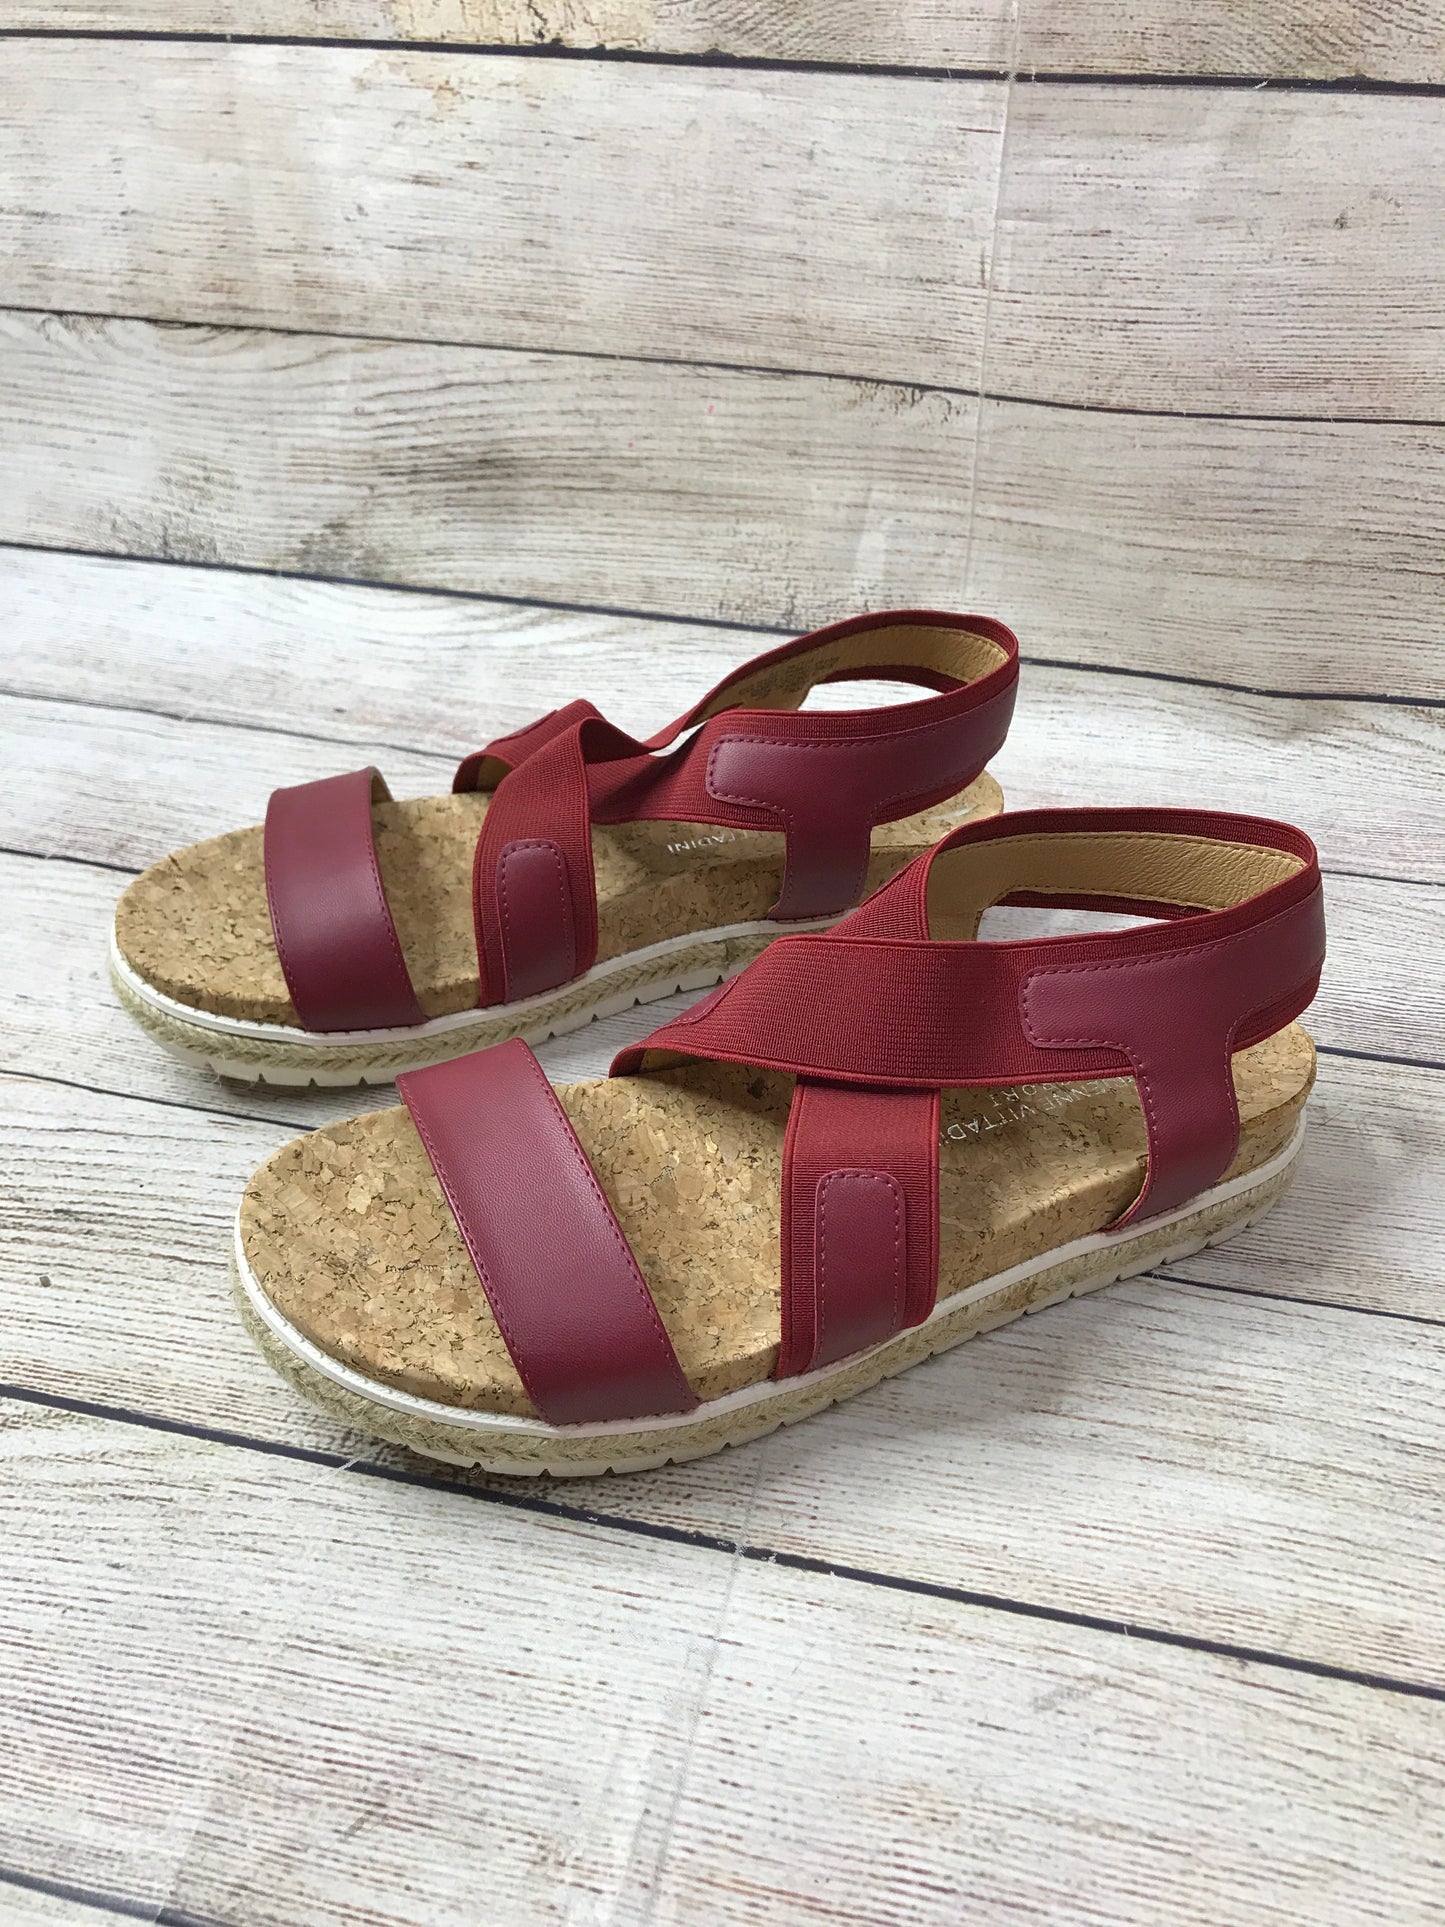 Red Sandals Heels Platform Adrienne Vittadini, Size 7.5